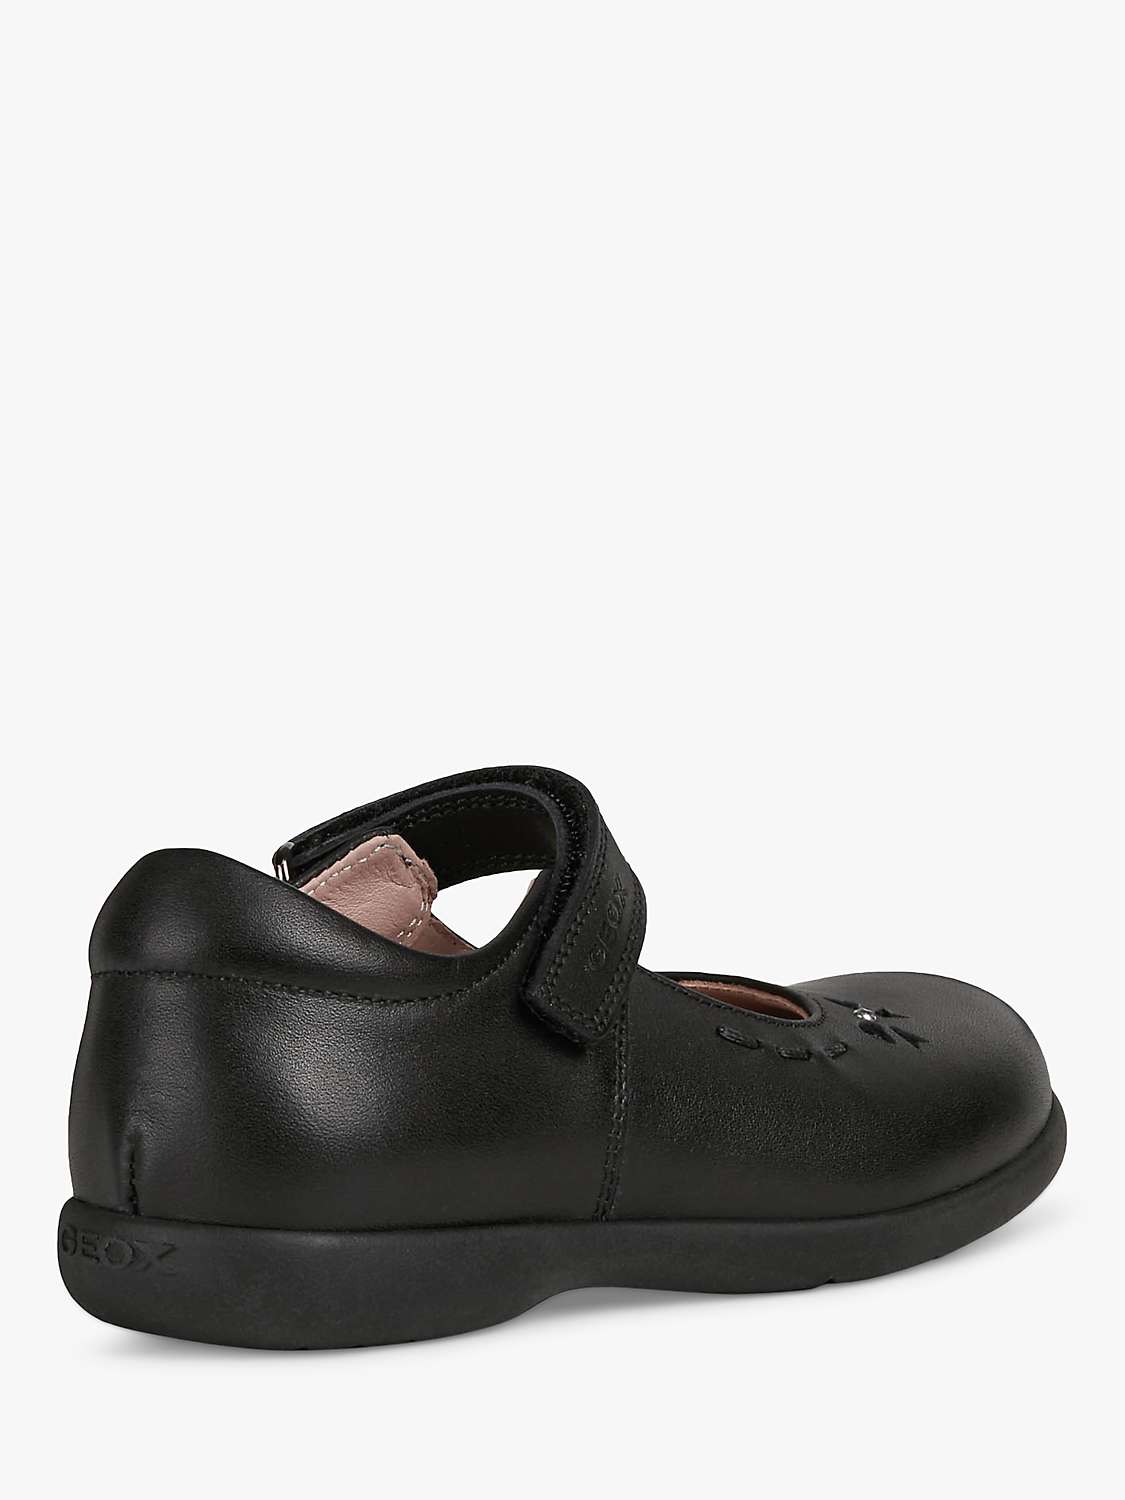 Buy Geox Kids' J Naimara Leather Mary Jane School Shoes, Black Online at johnlewis.com